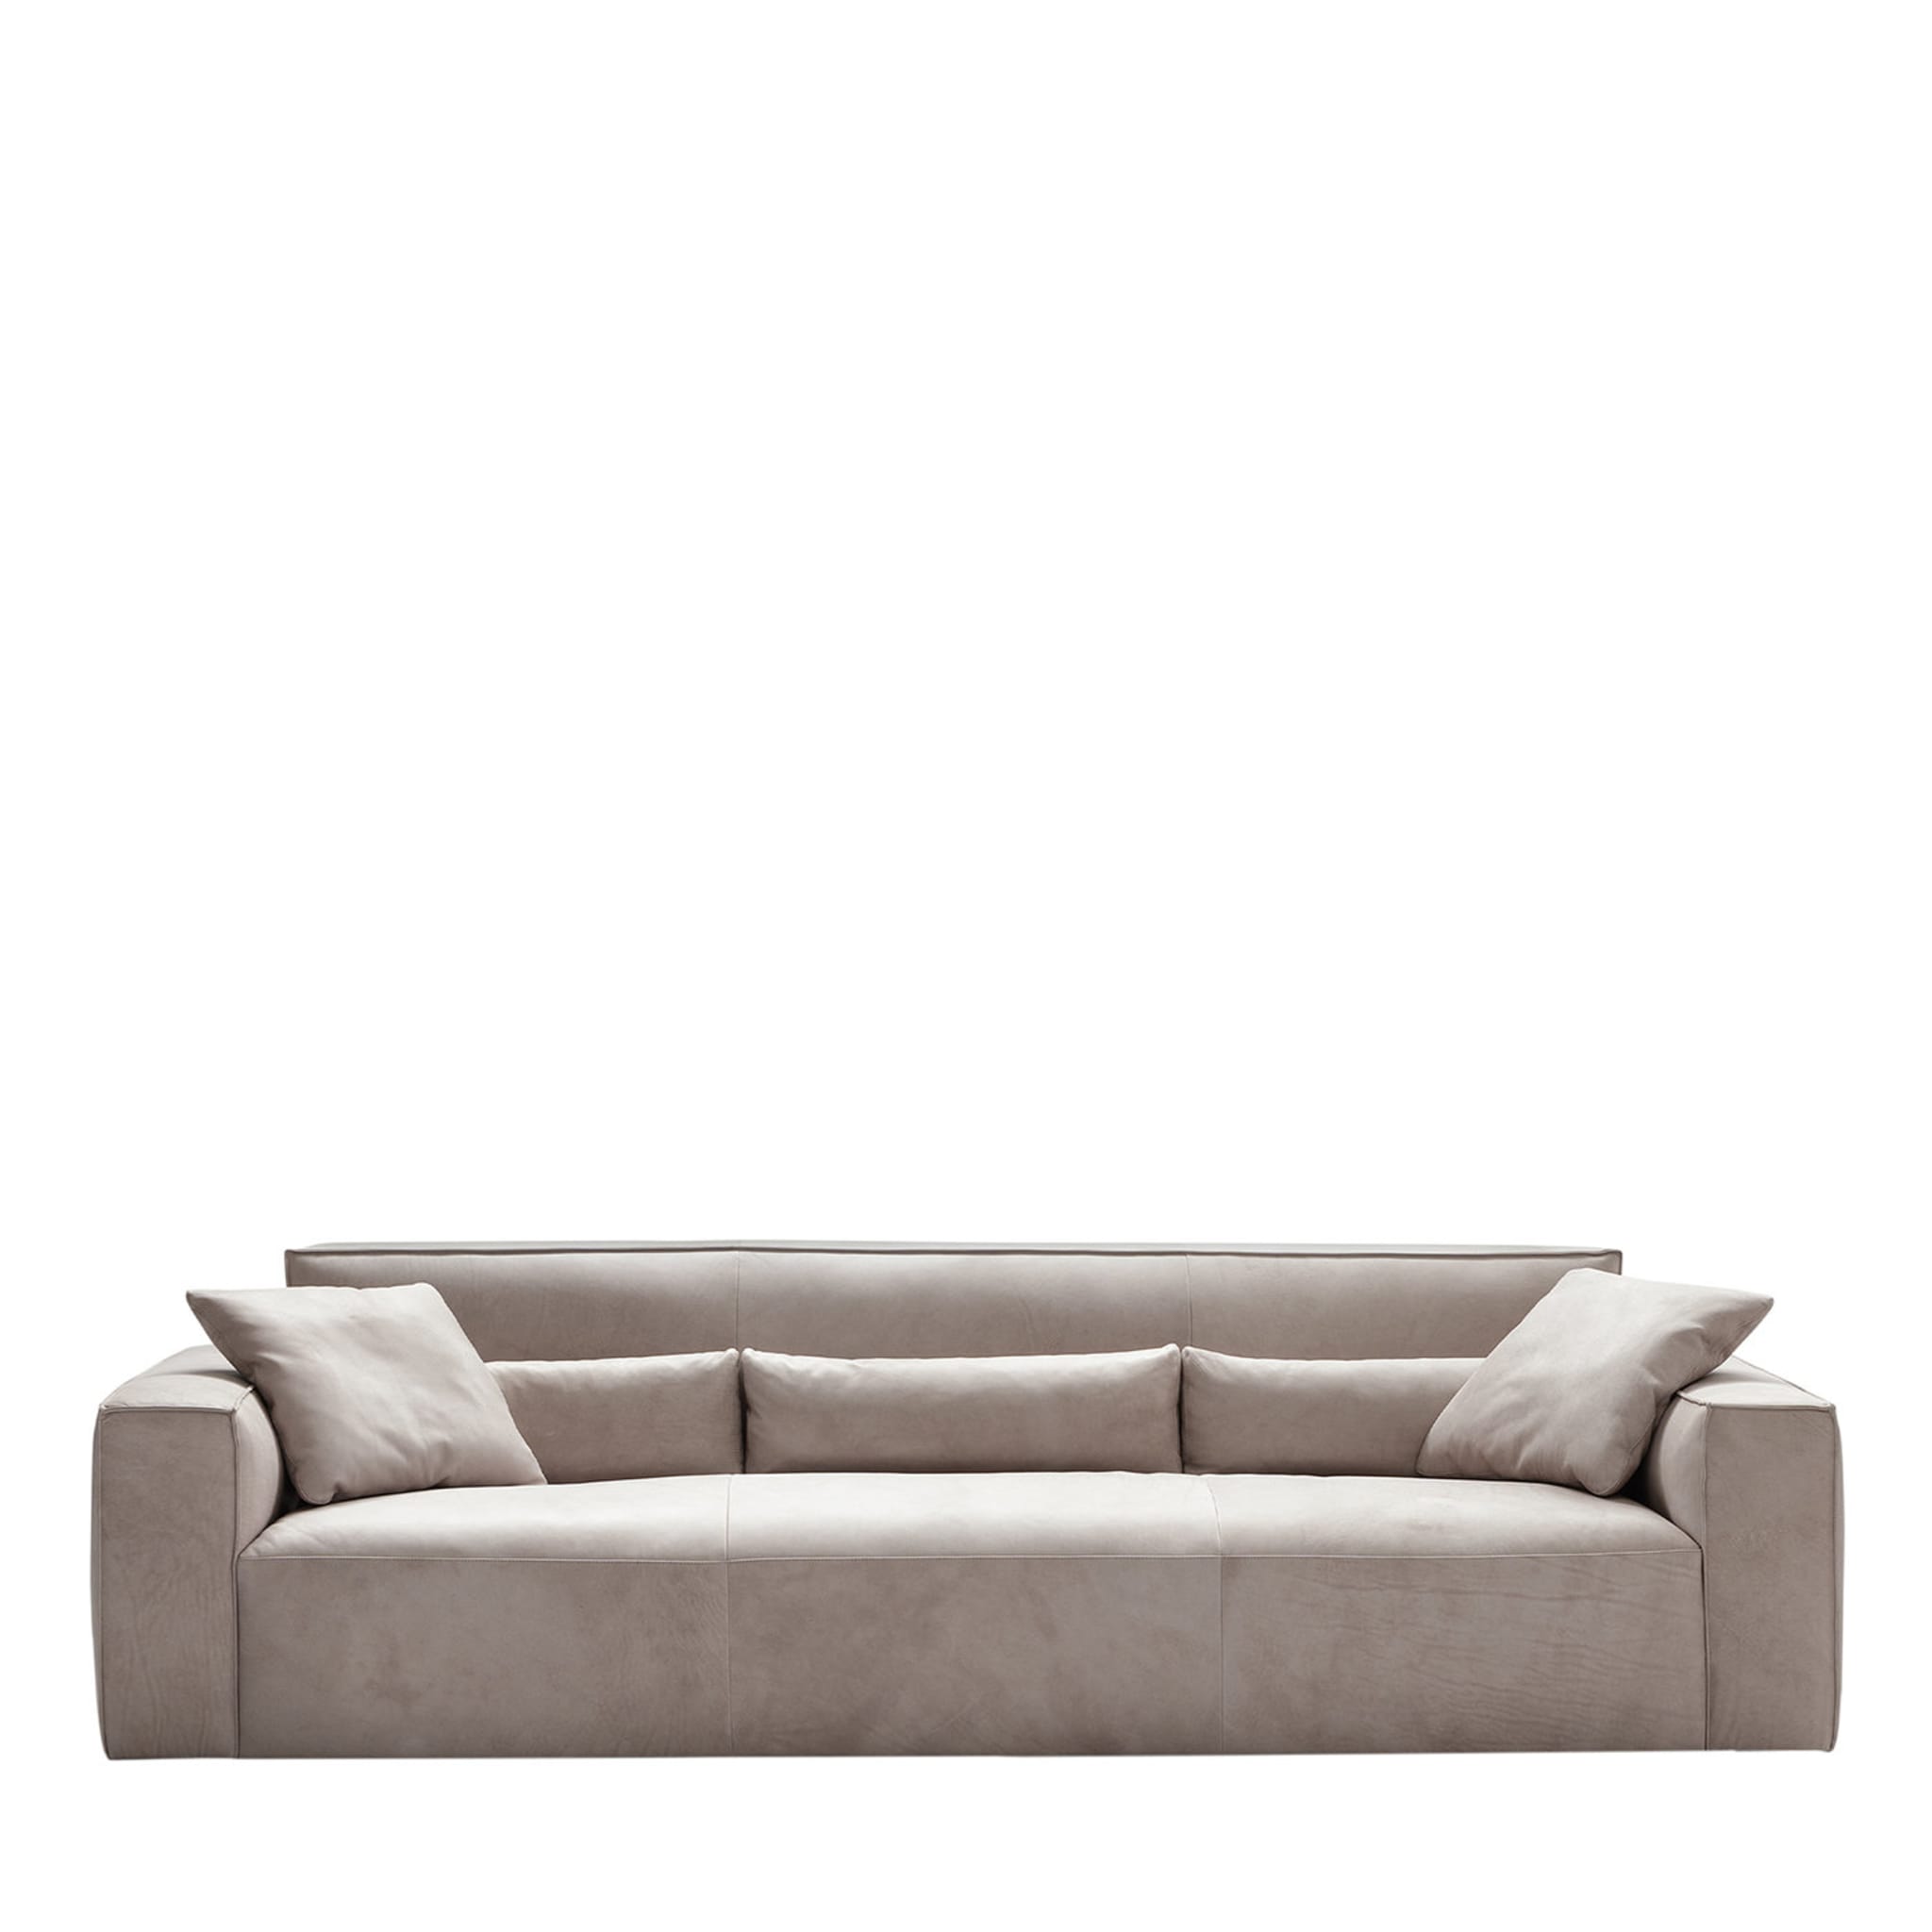 Santamonica Gray Leather 3-Seater Sofa - Main view